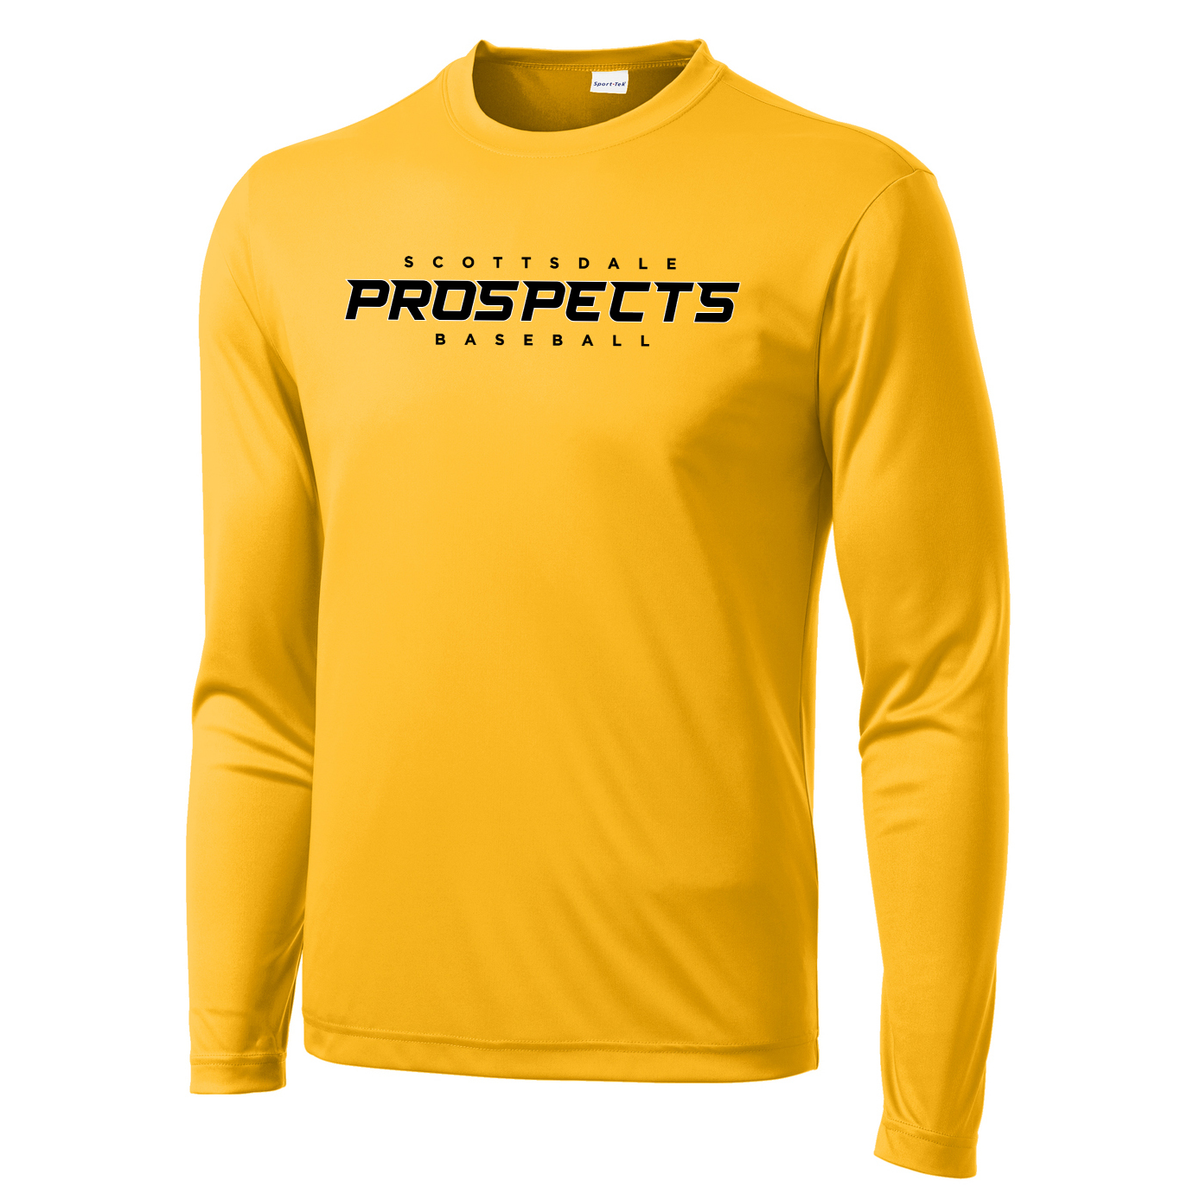 Scottsdale Prospects Baseball Long Sleeve Performance Shirt